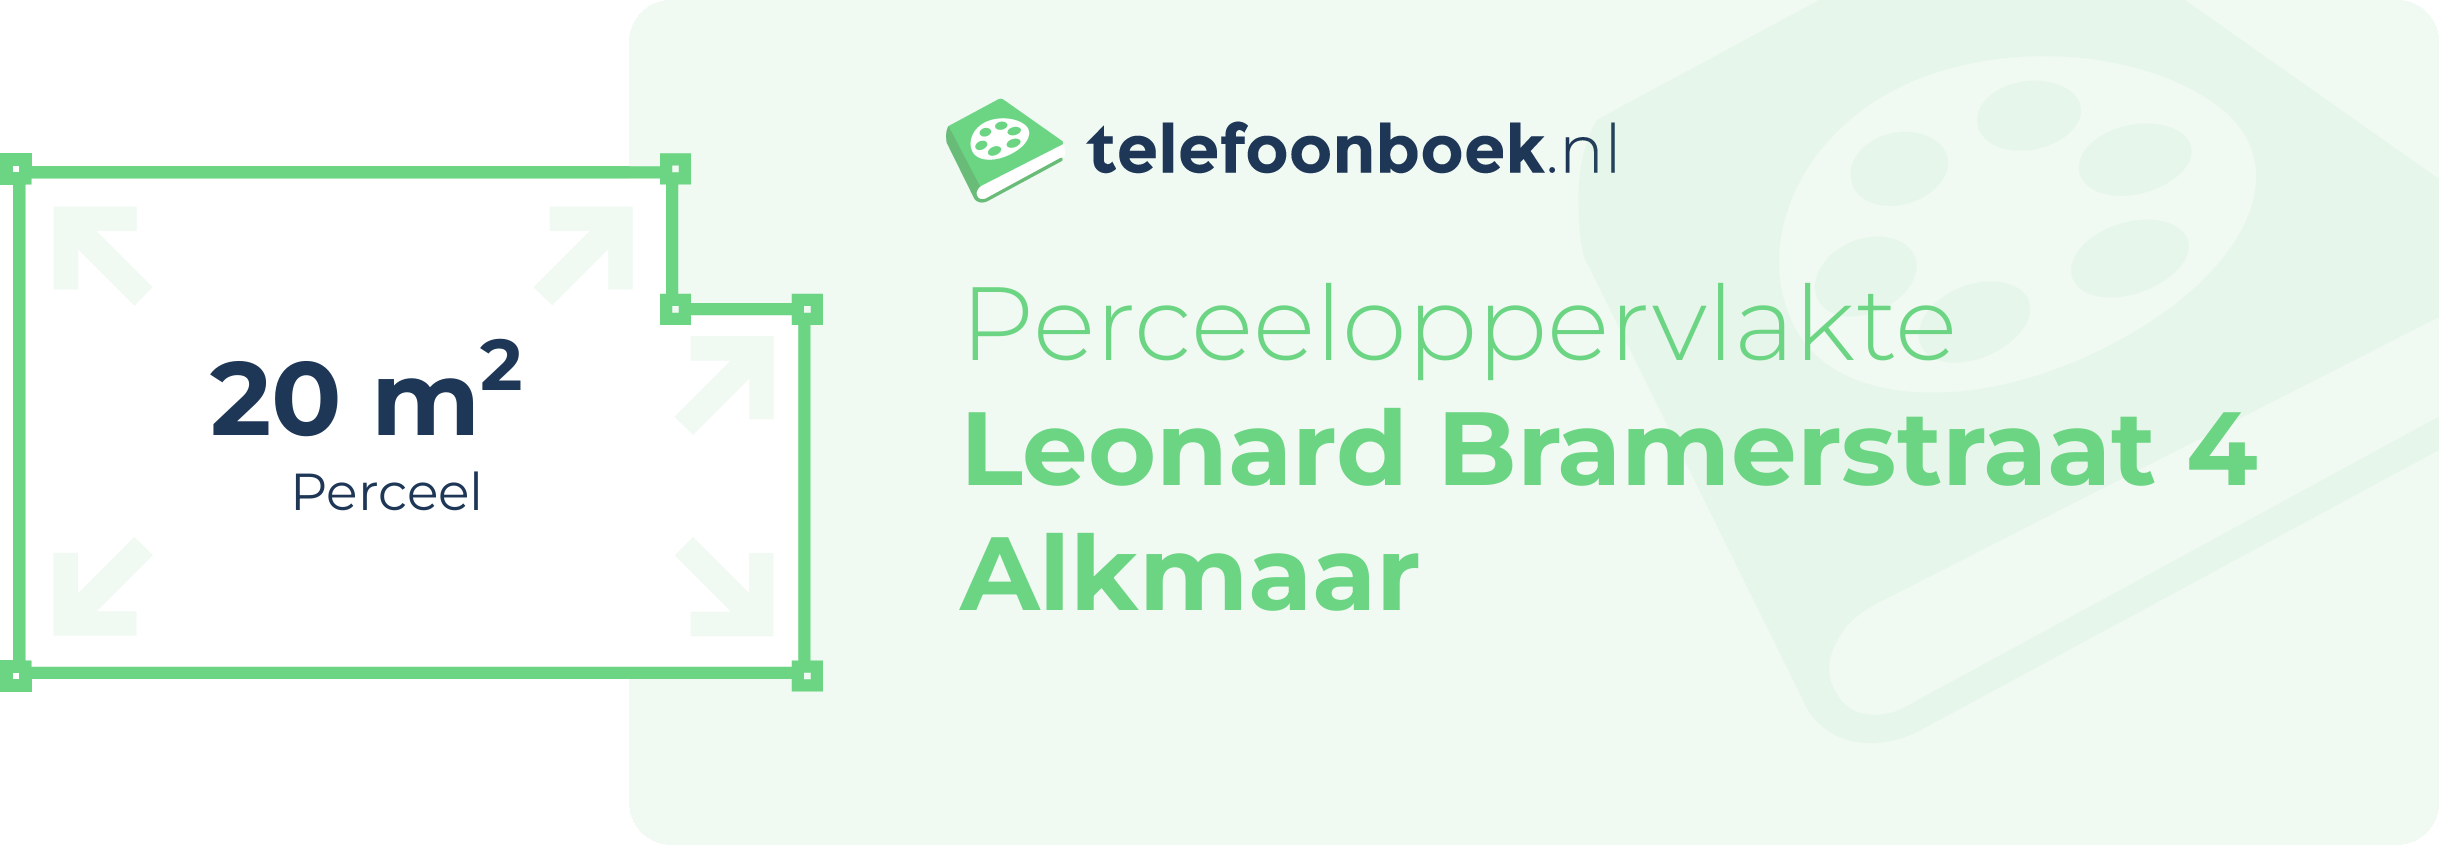 Perceeloppervlakte Leonard Bramerstraat 4 Alkmaar